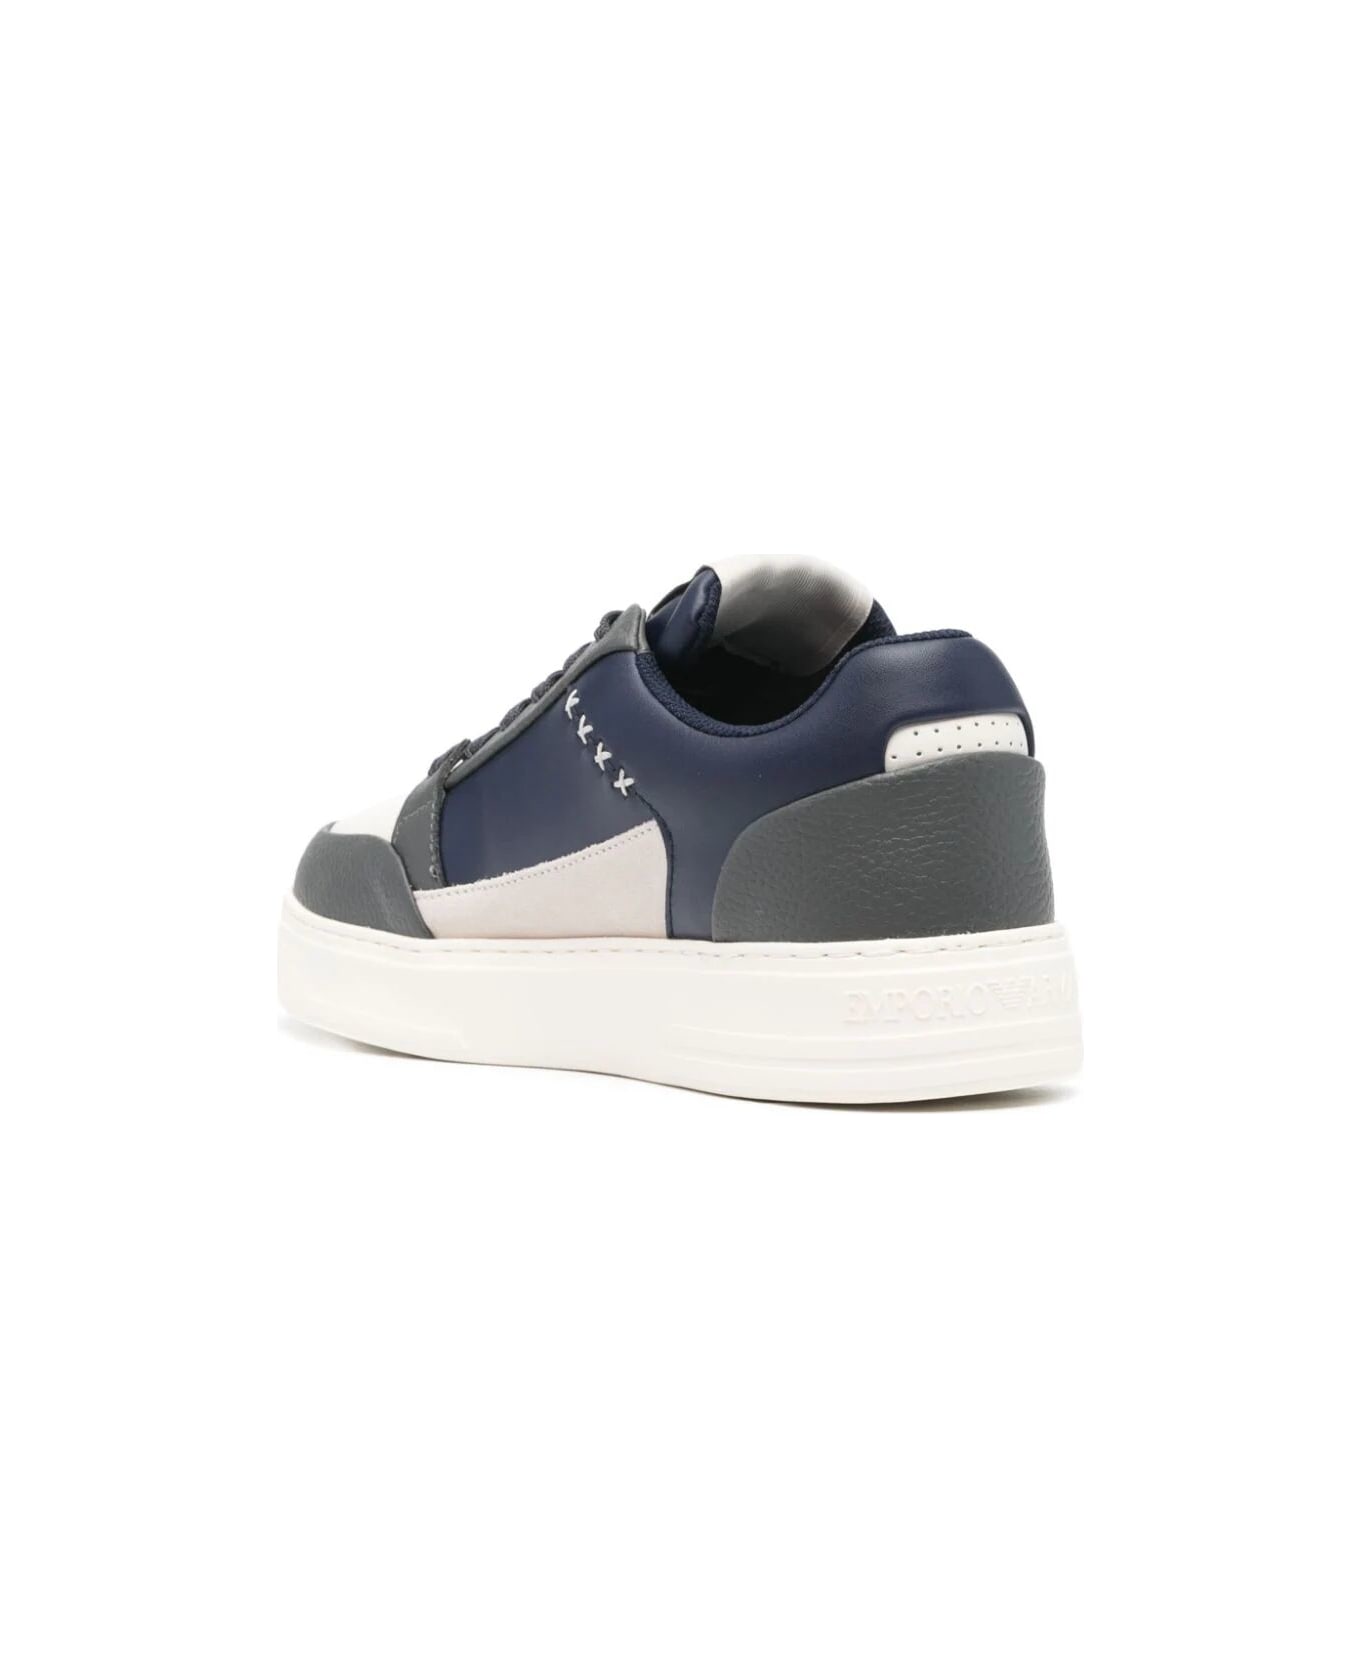 Emporio Armani Suede Sneaker - Grey Off White